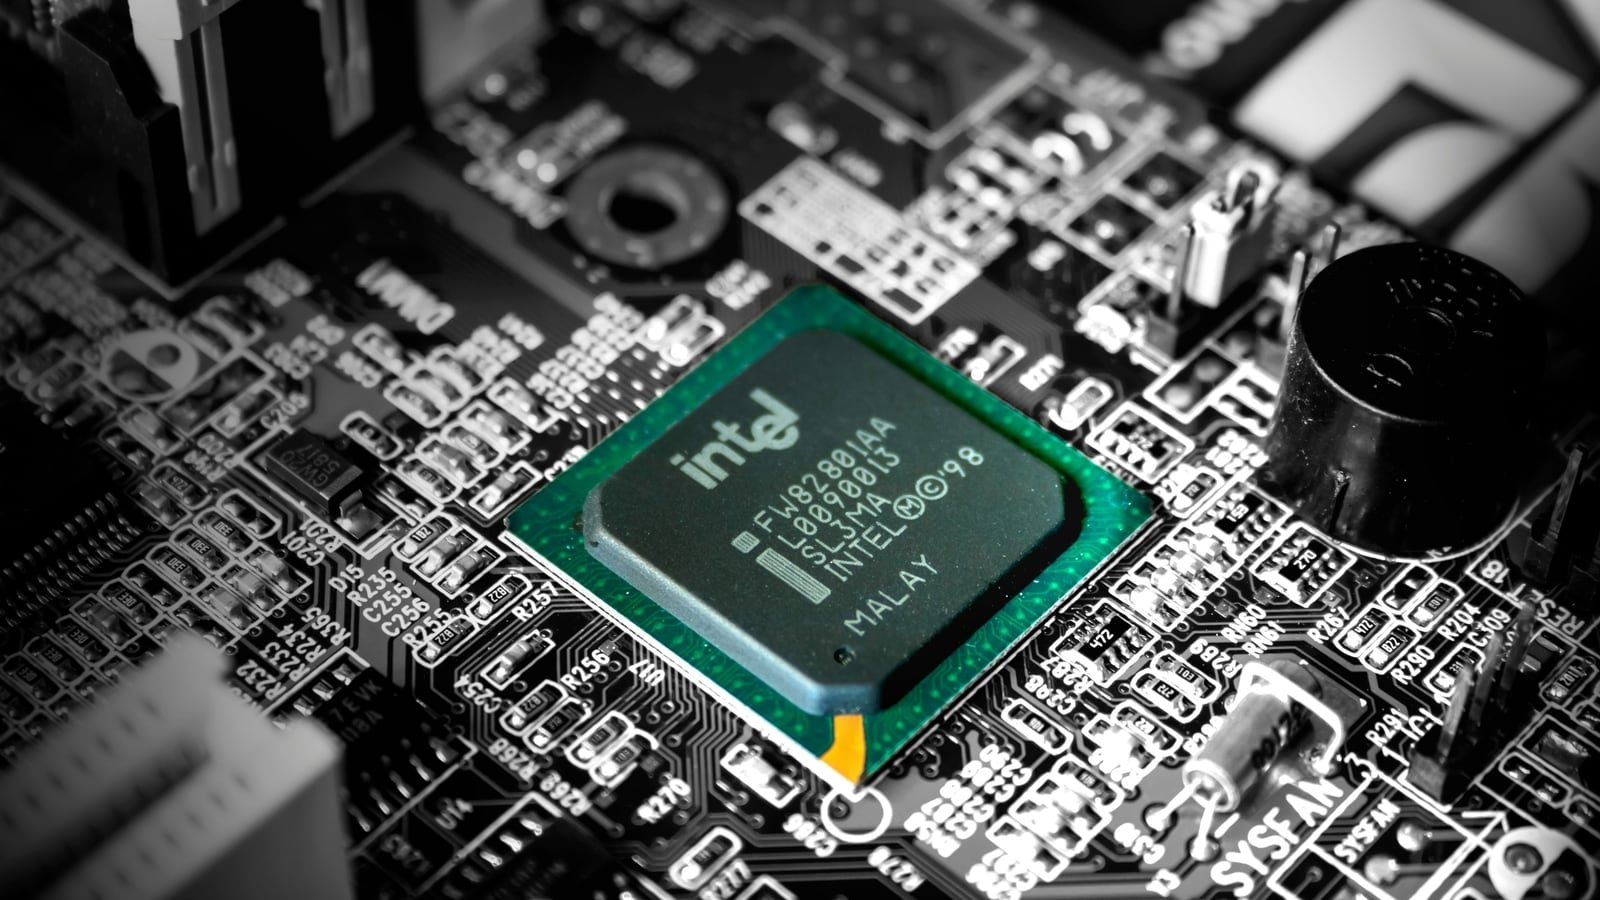 Intel hits 500 AI models milestone for Intel Core Ultra processors - All the details